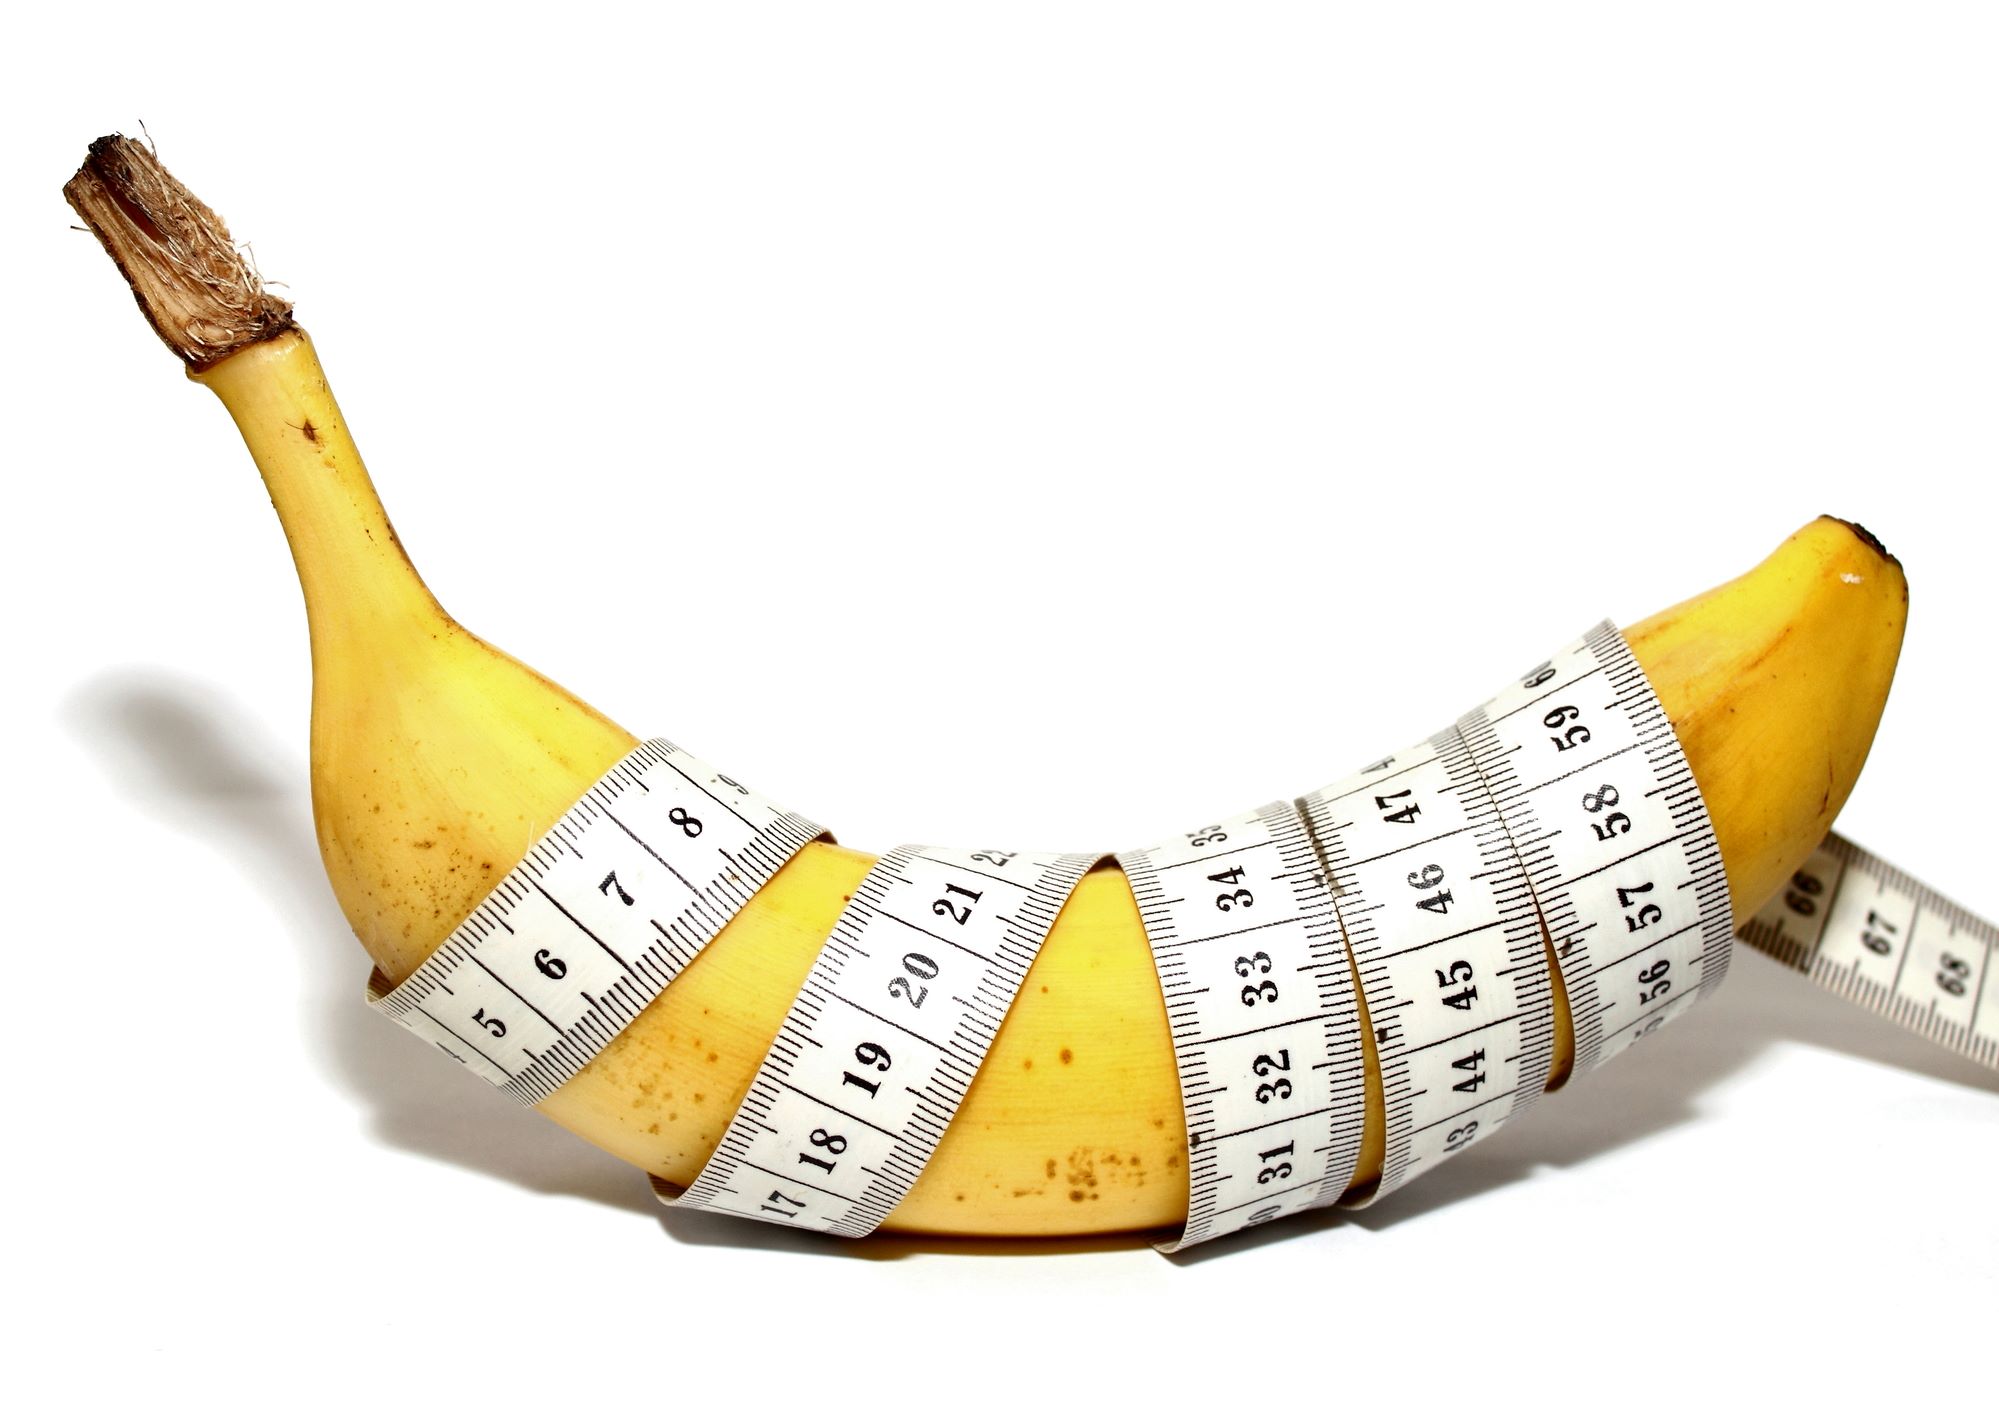 measuring tape wrapped around banana